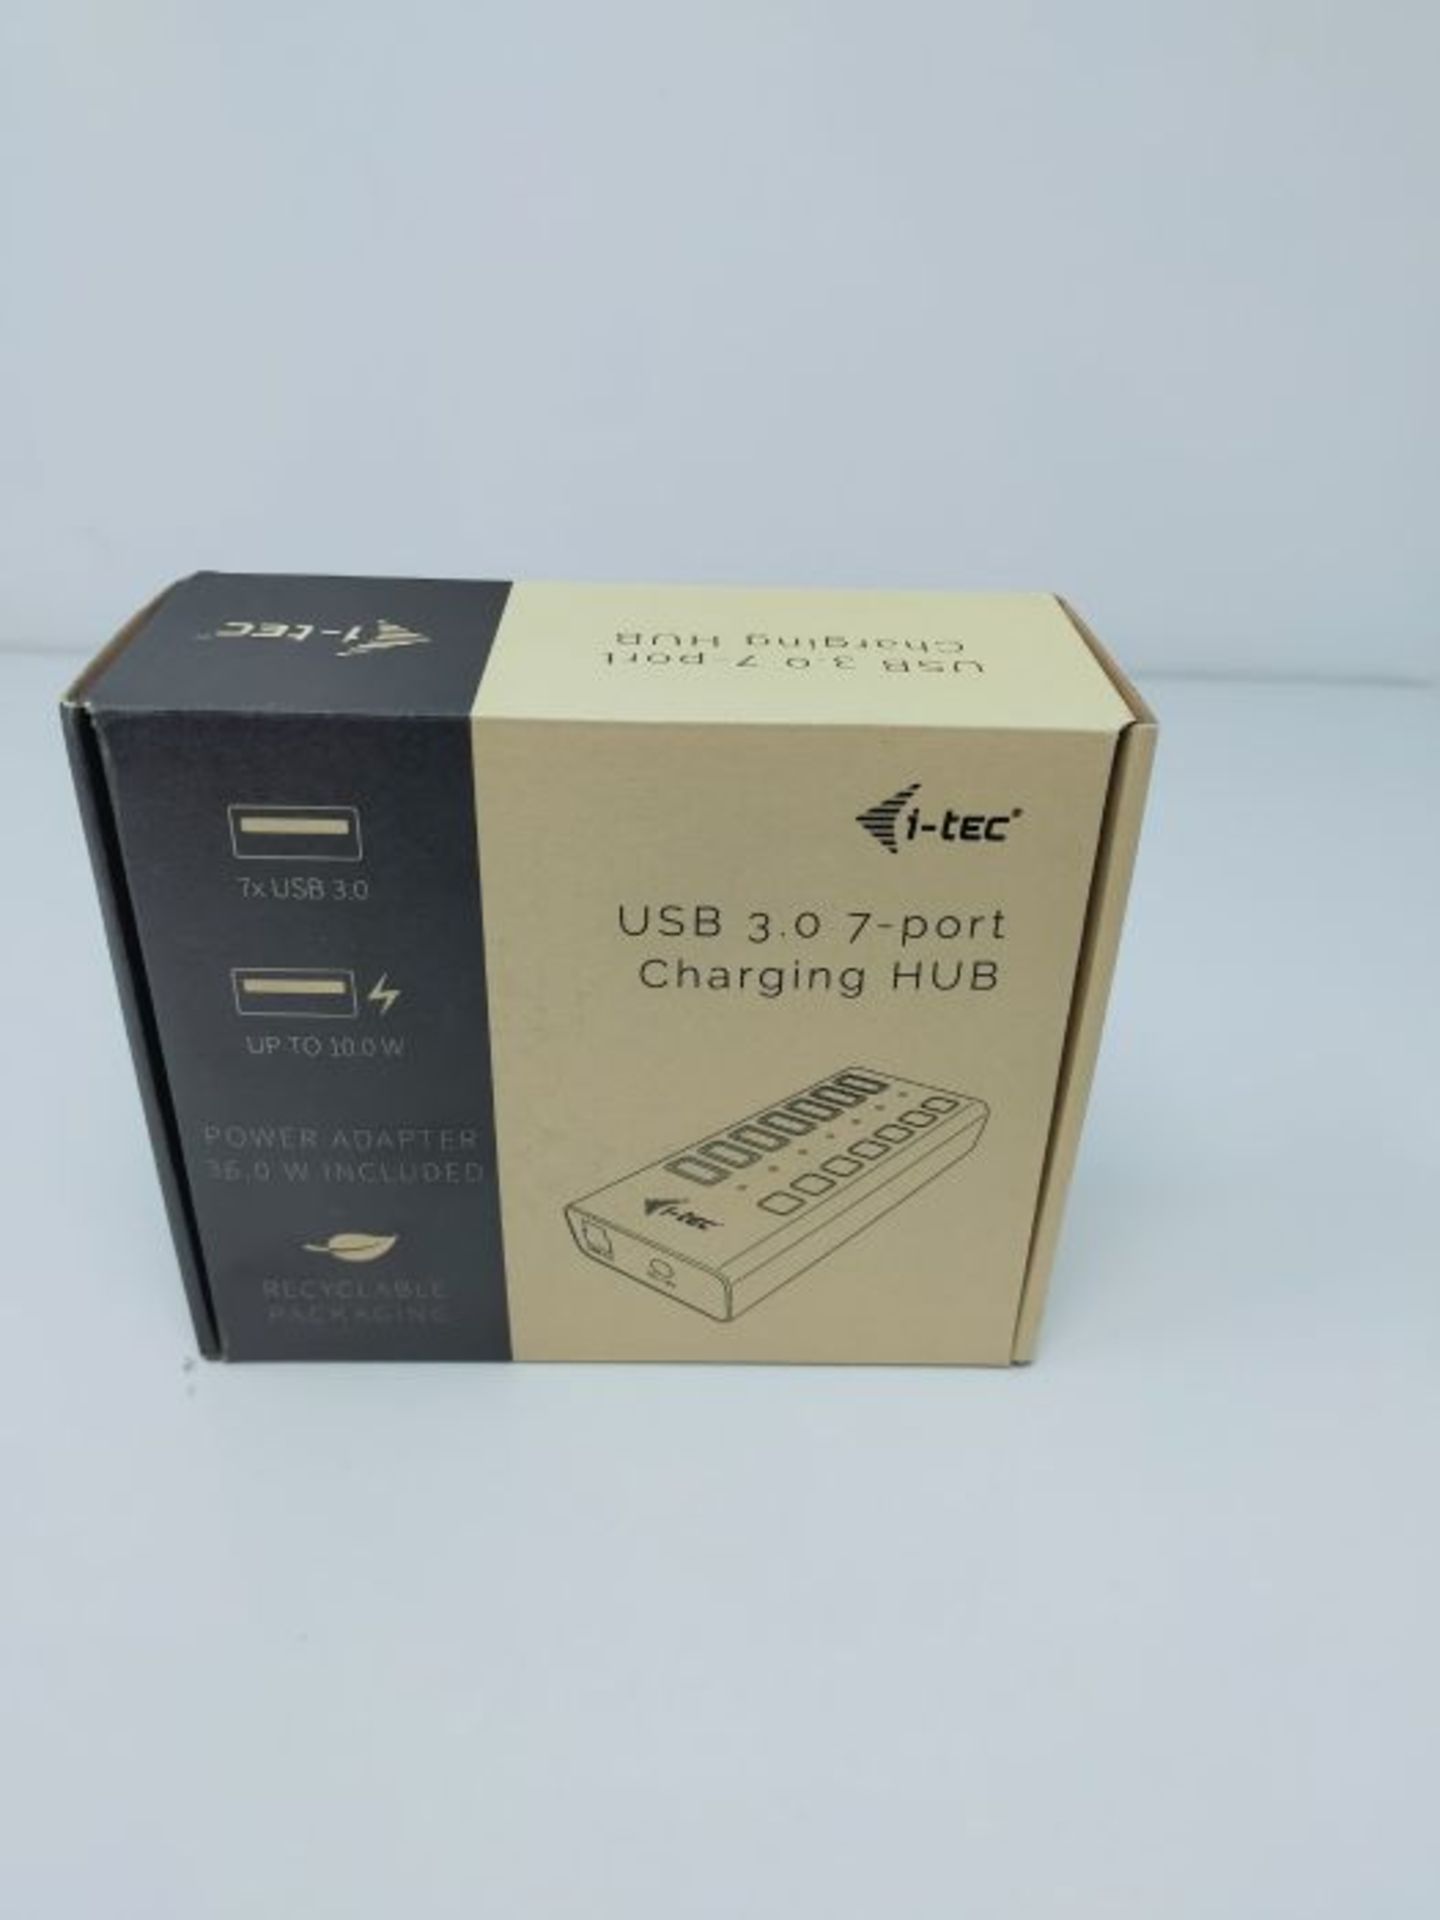 i-tec USB 3.0 Charging USB HUB 7-Port - Image 2 of 3